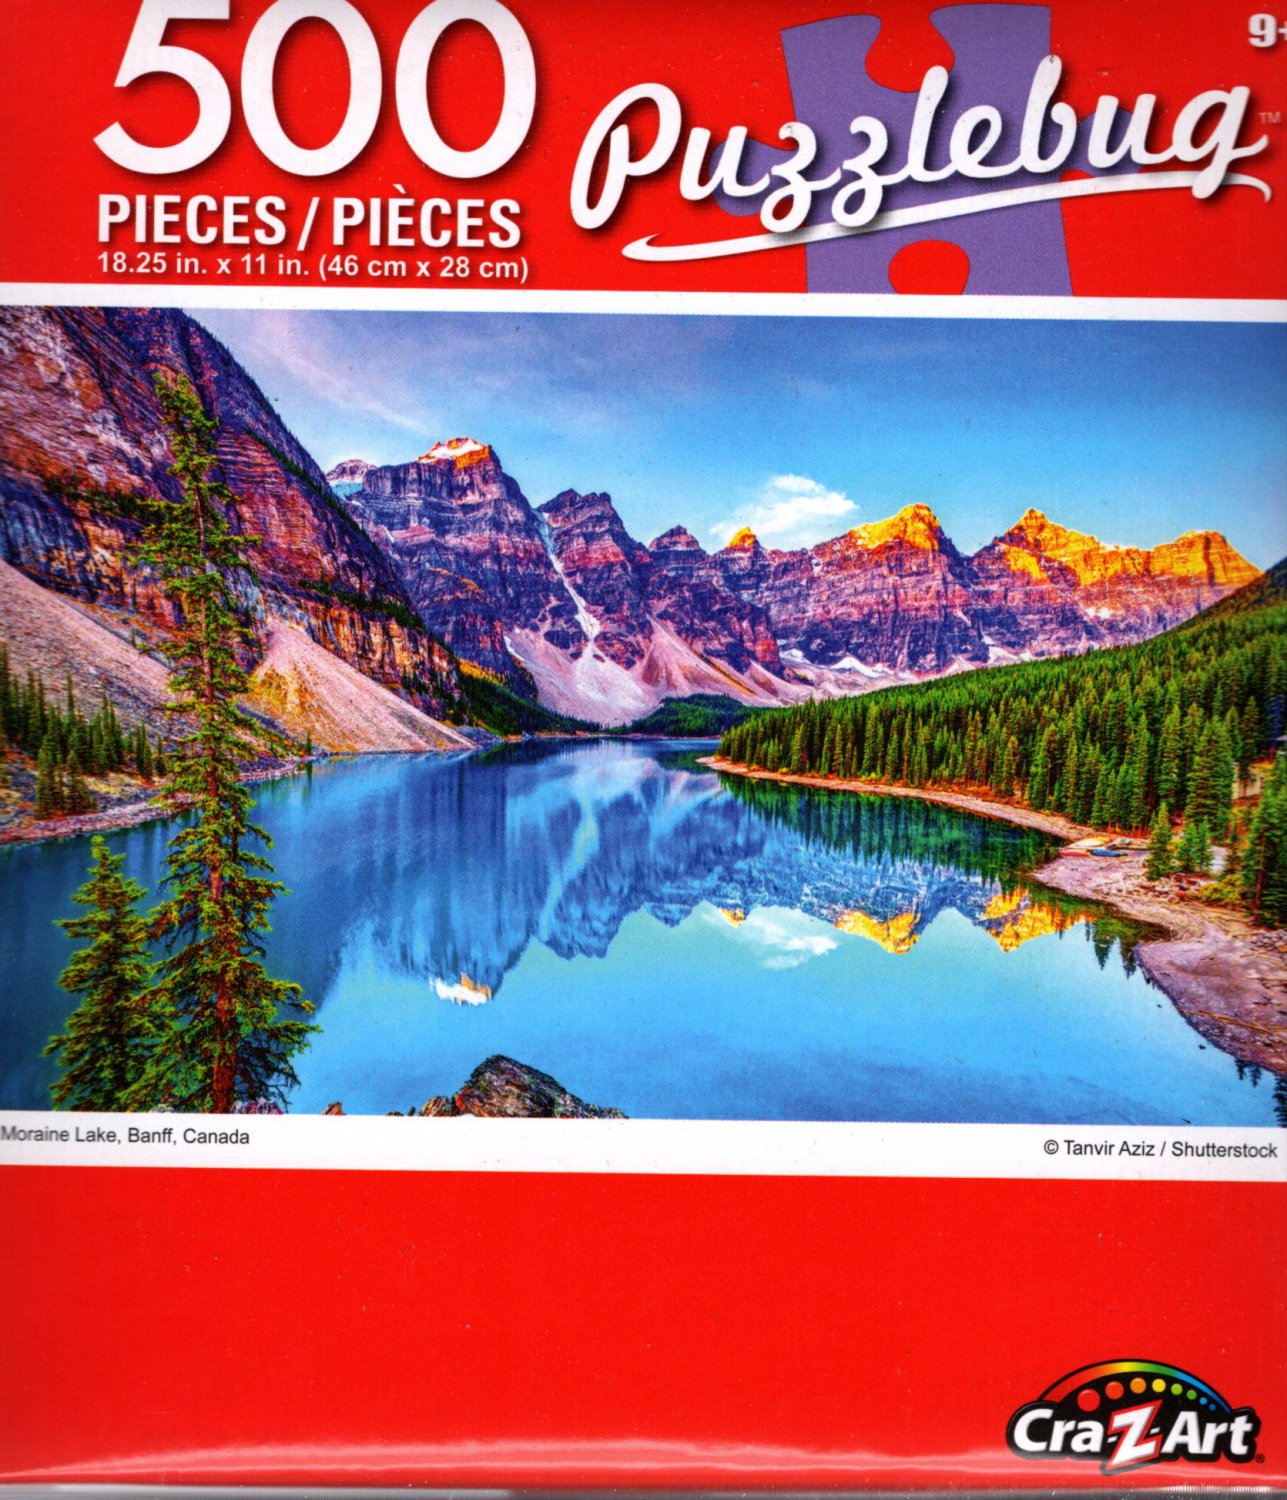 Cra Z Art Moraine Lake Banff Canada 500 Piece Jigsaw